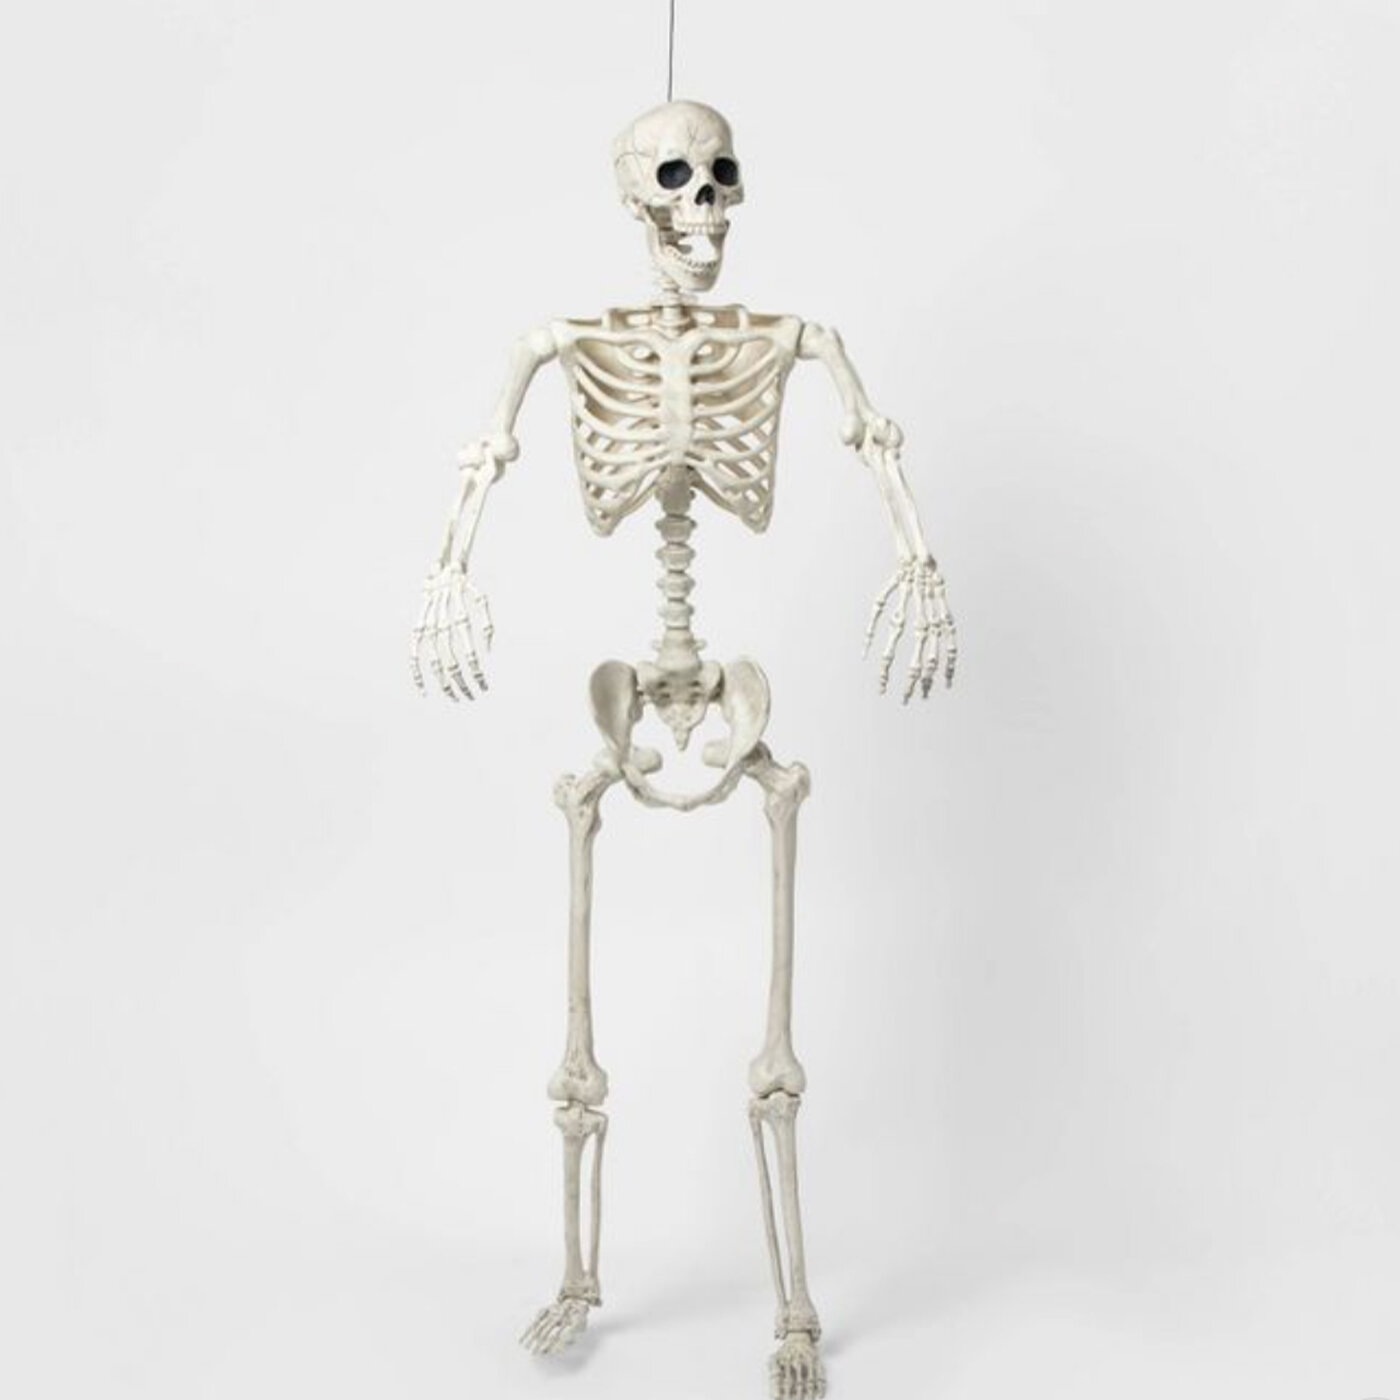 60" Posable Lifesize Skeleton XL Halloween Decorative Mannequin